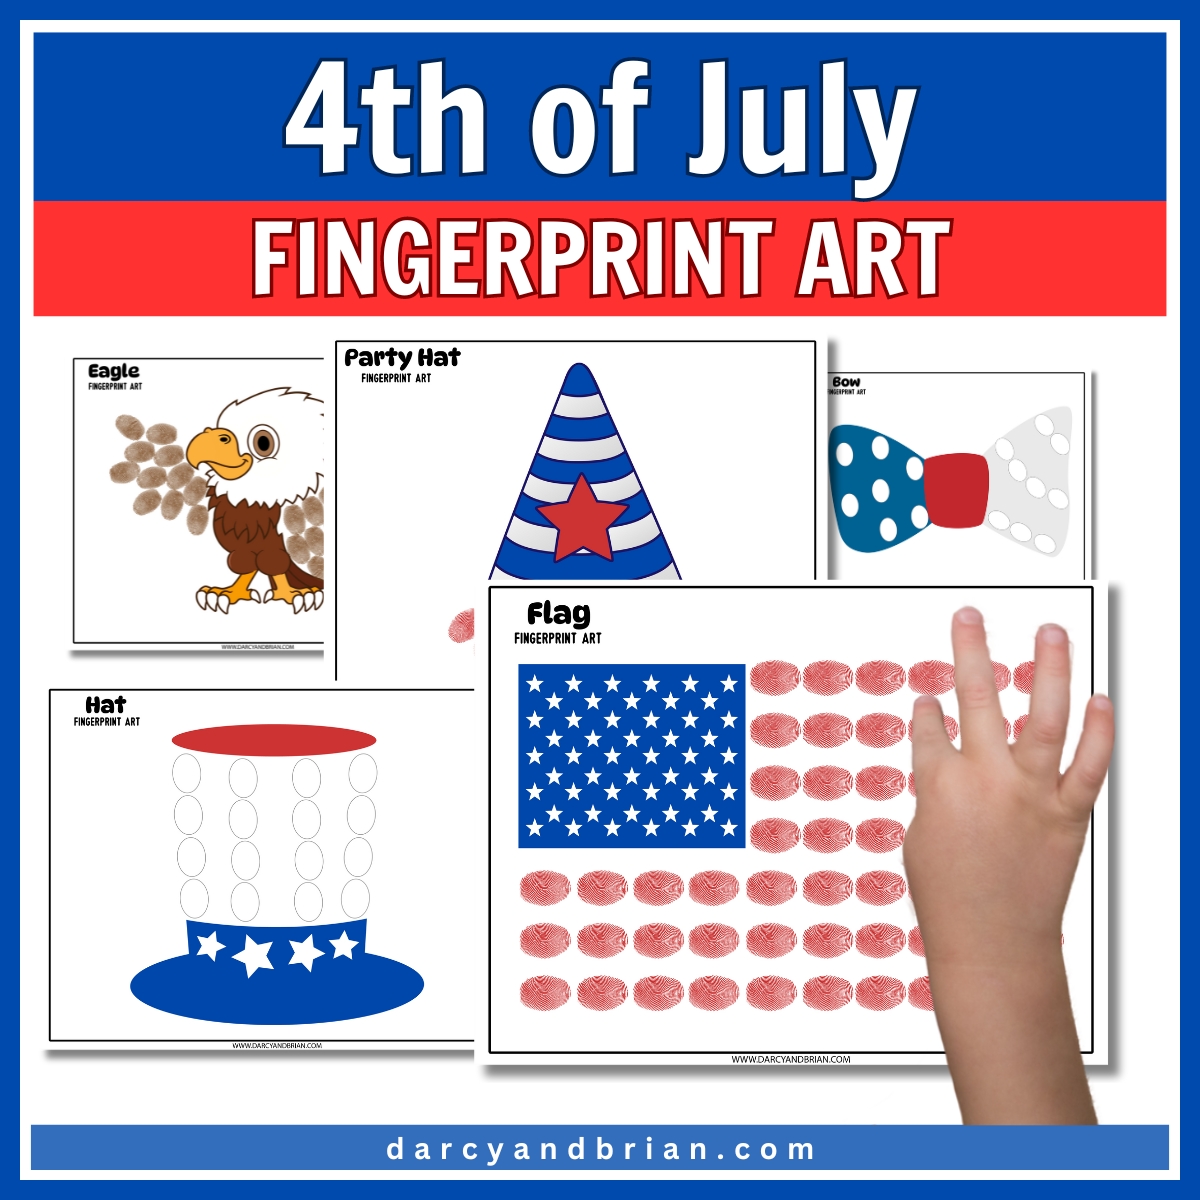 4th of July Fingerprint Art Templates